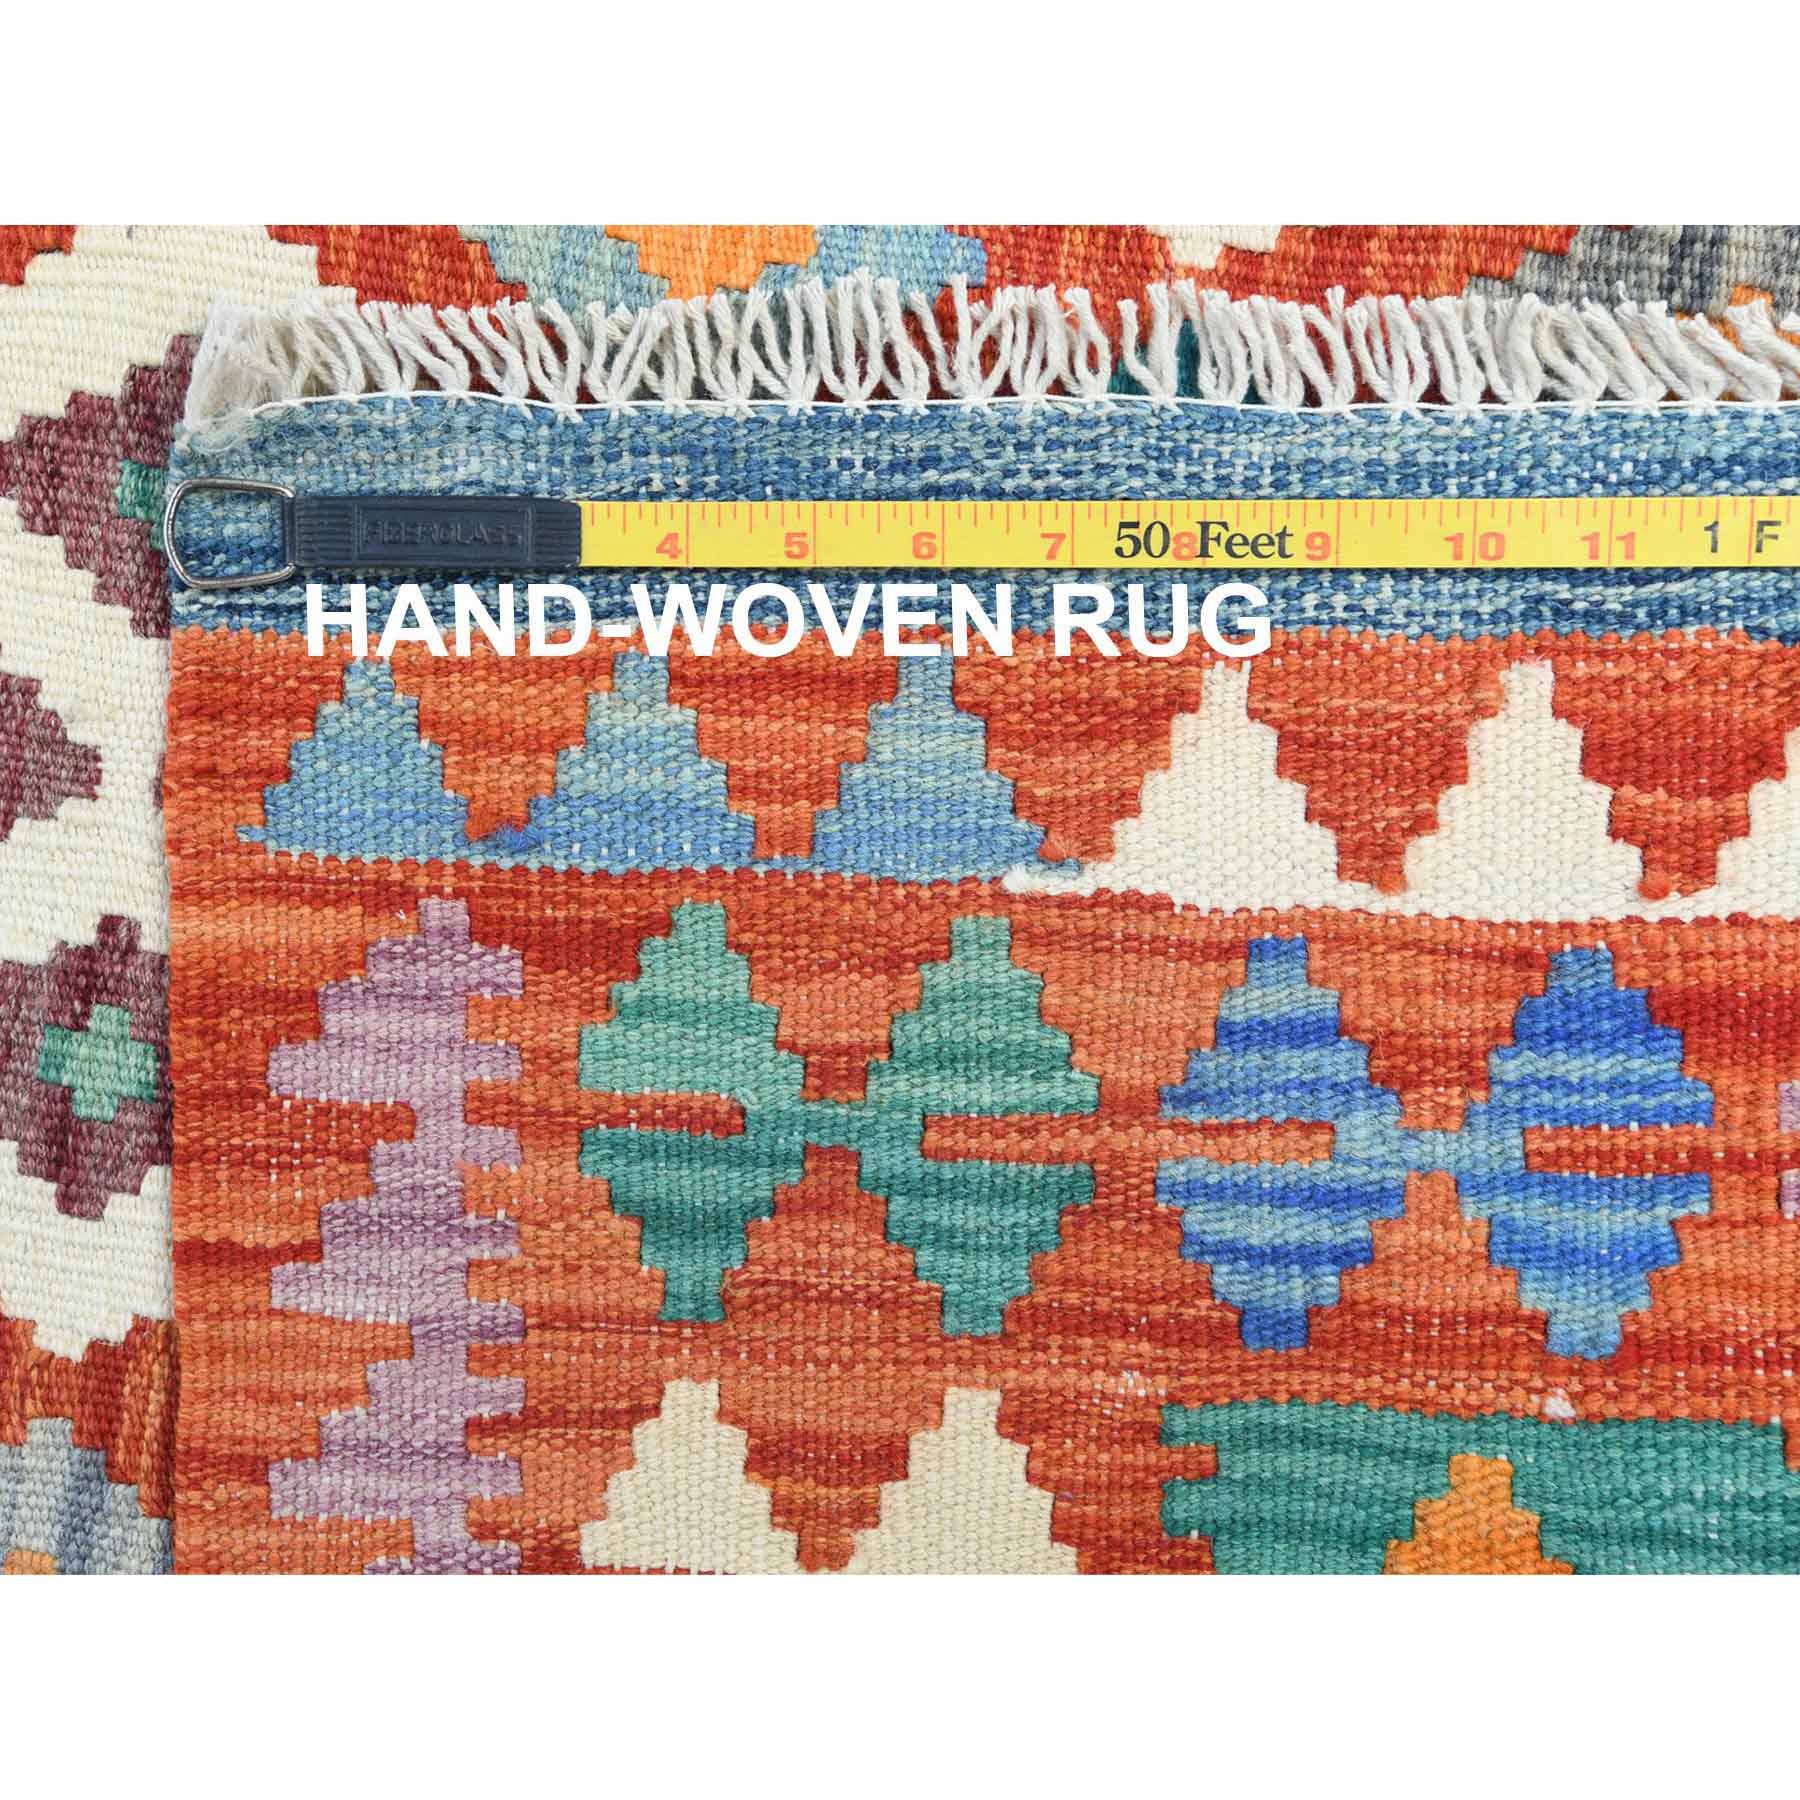 Flat-Weave-Hand-Woven-Rug-406660